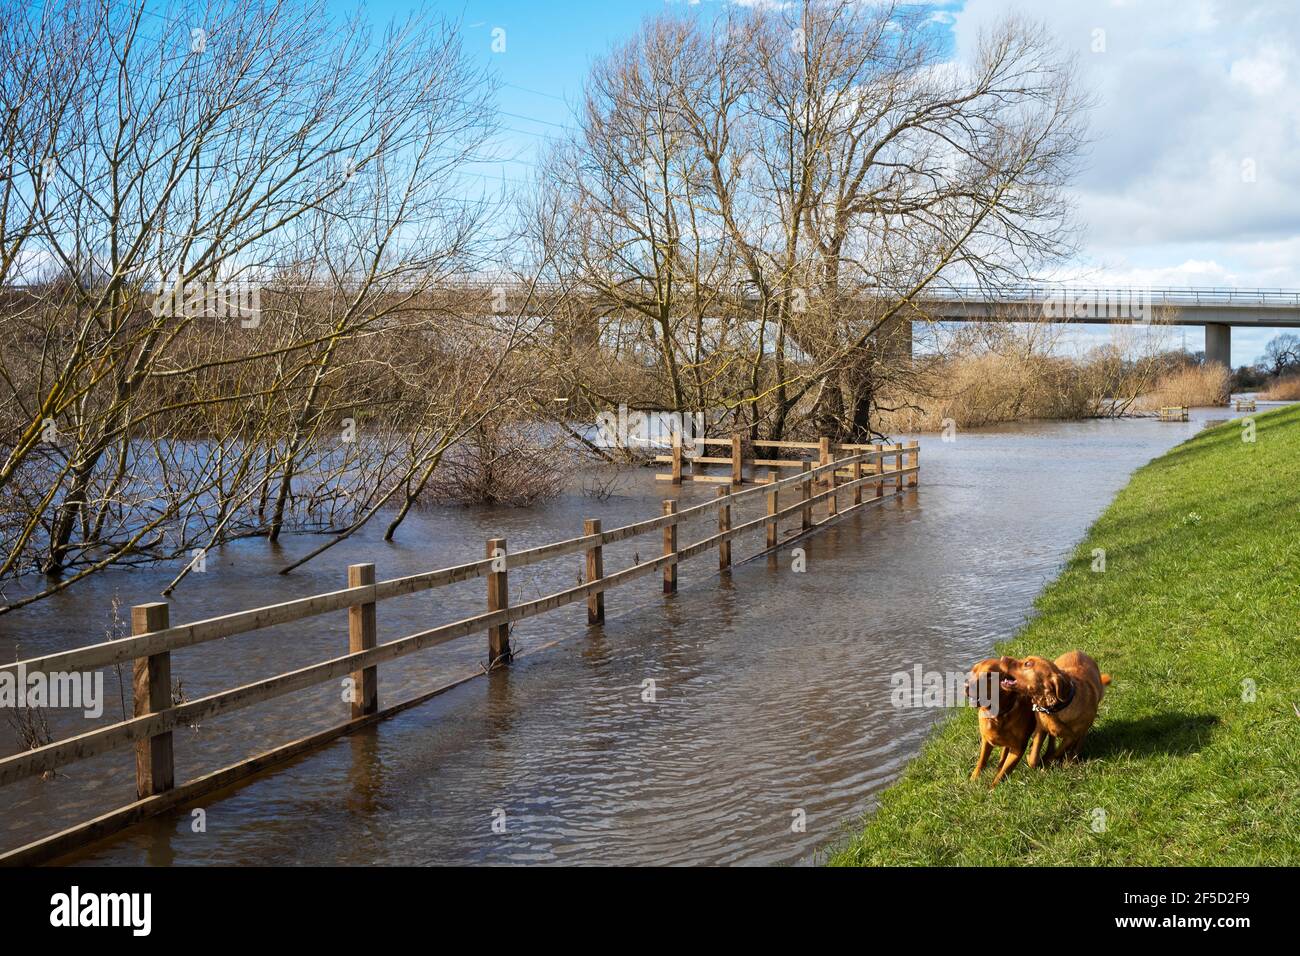 Rampicante lungo il levee, River Ouse, Clifton Ings, York, Regno Unito Foto Stock